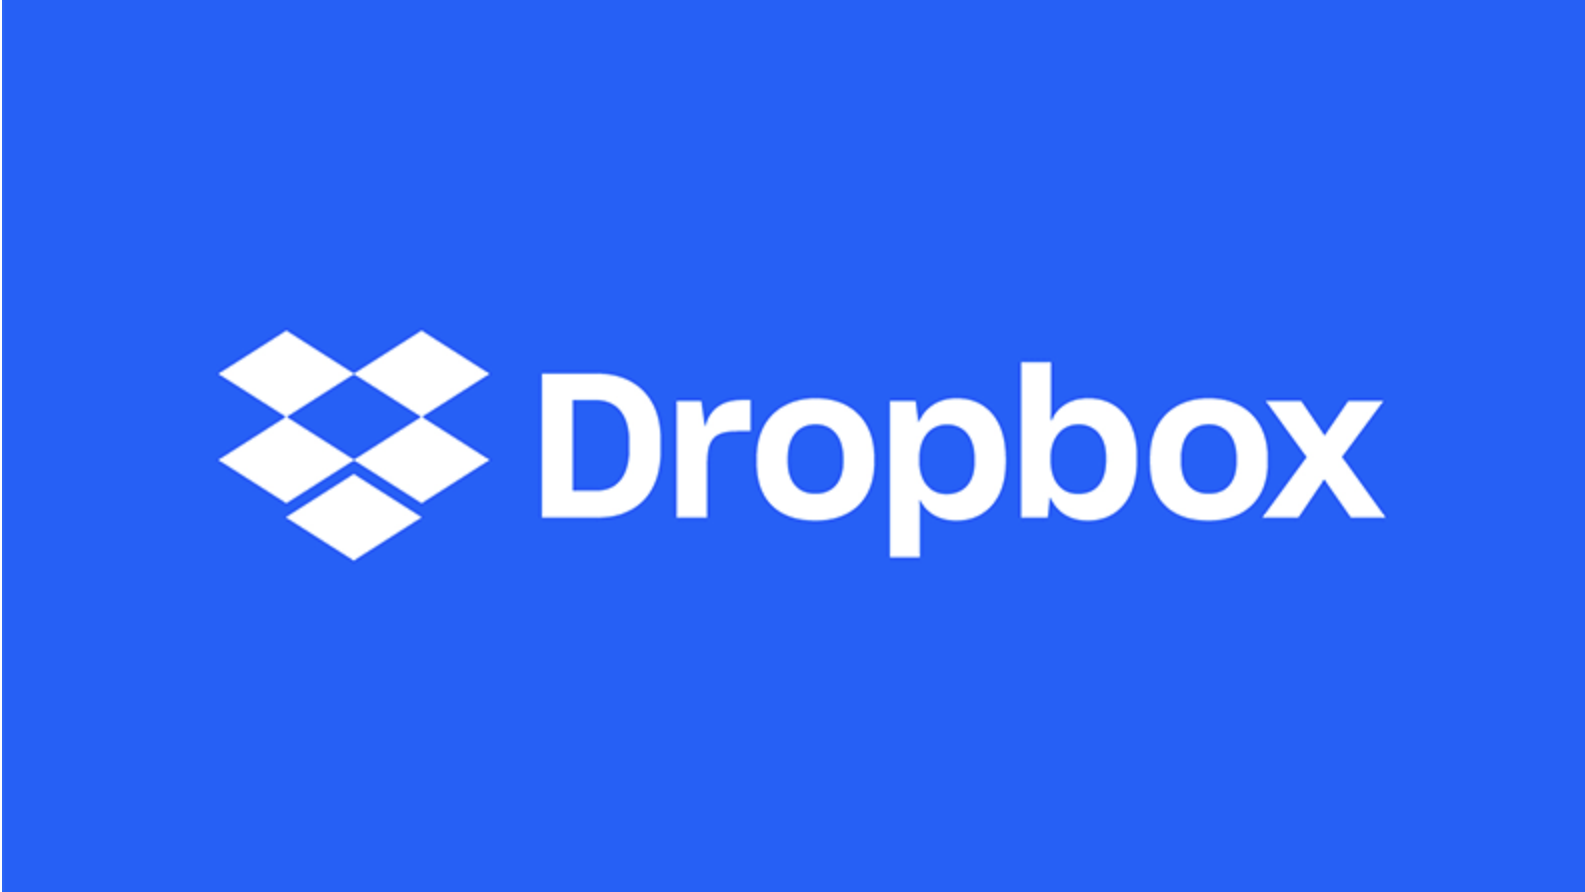 dropbox plus discount